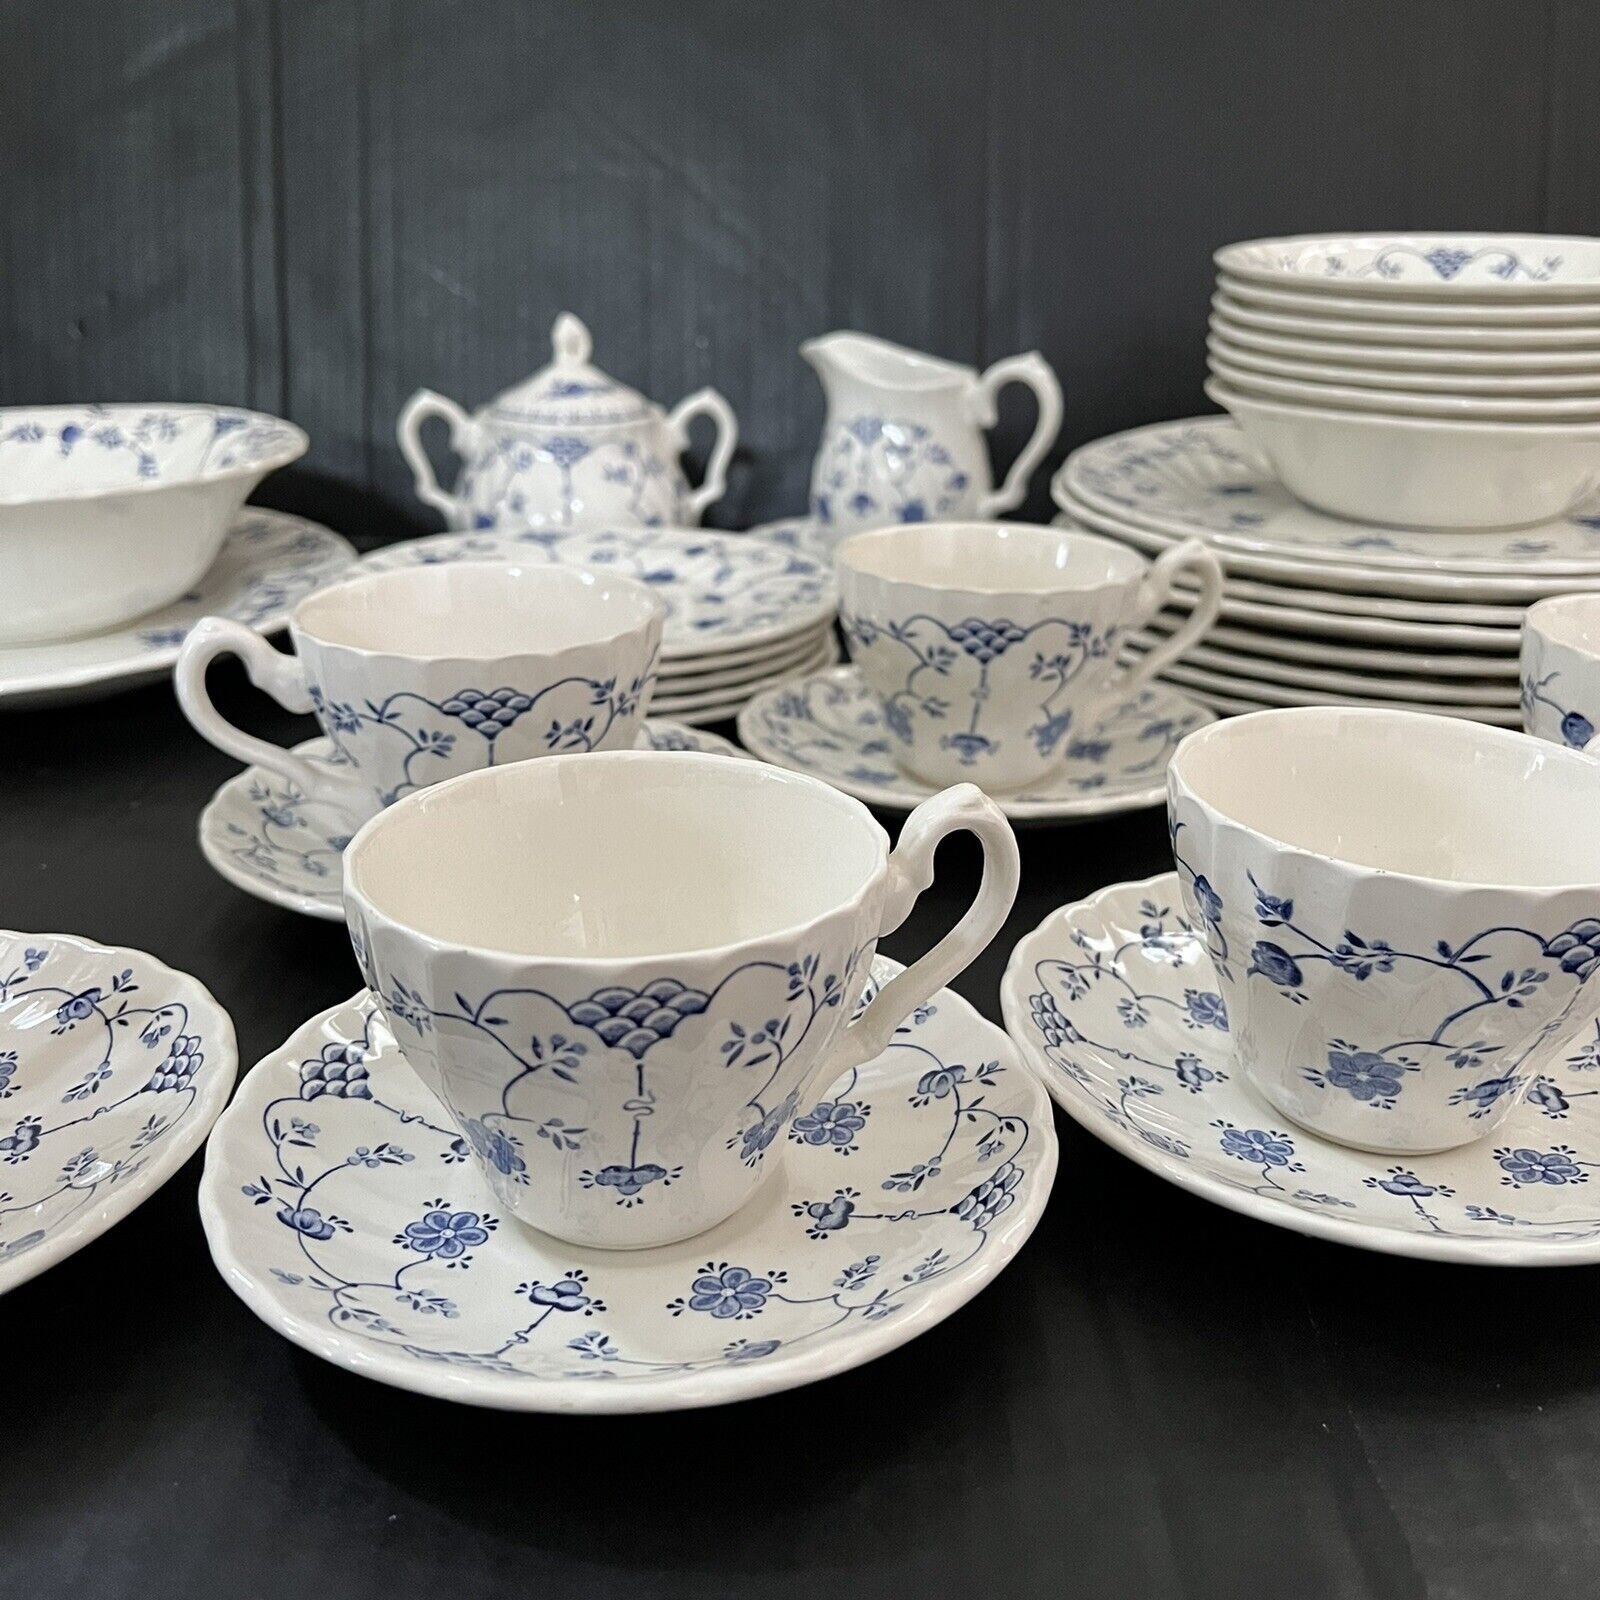 MYOTT STAFFORDSHIRE FINLANDIA TABLE WEAR TEA DINNER SET blue White CHINA 40 pcs dYG2vm4iM